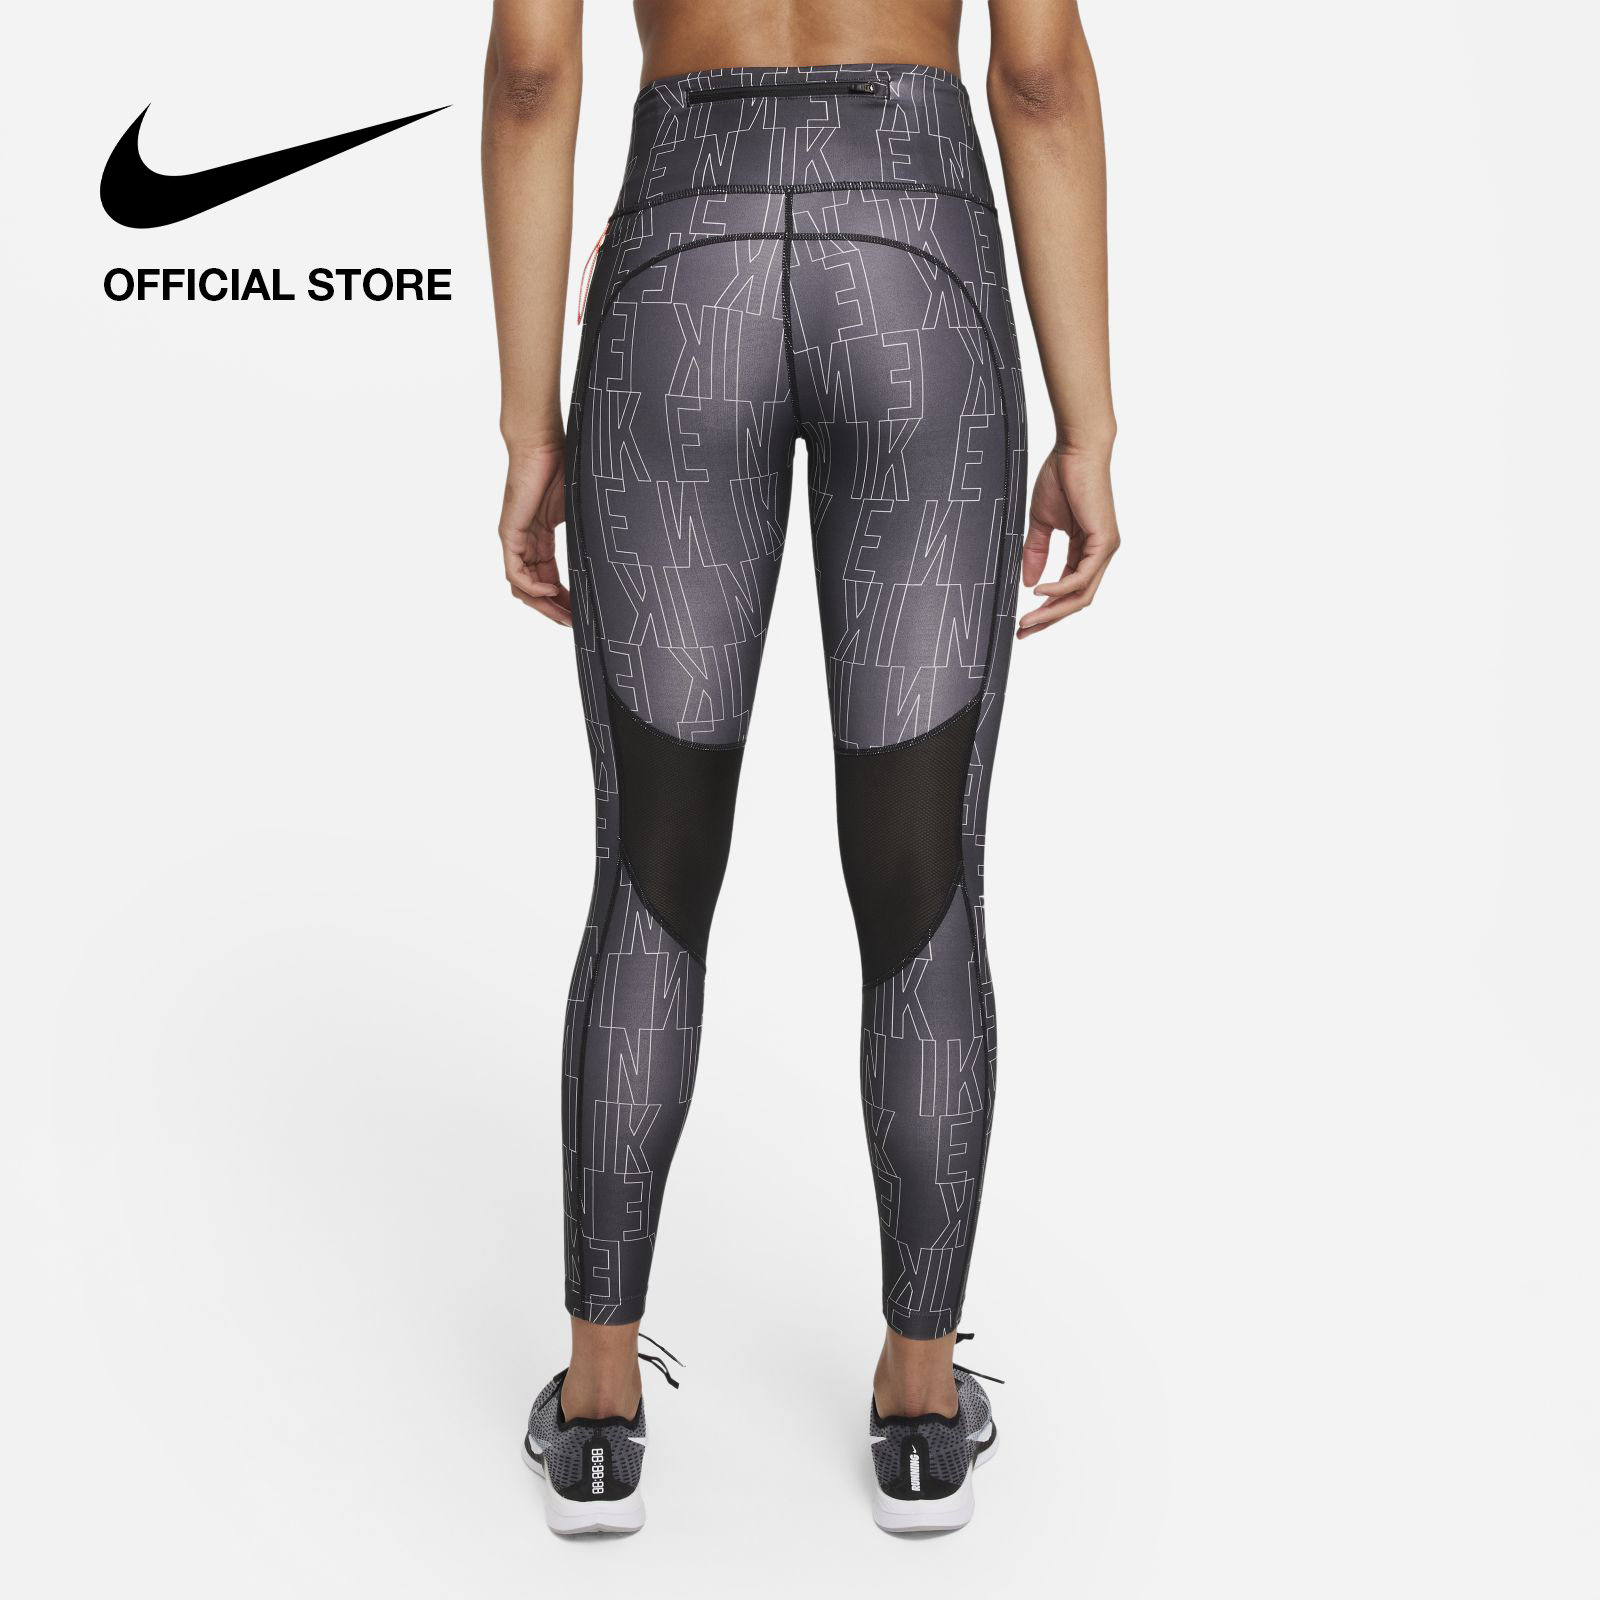 Nike Women's Dri-FIT Run Division Epic Fast Mid-Rise Running Leggings - Black ไนกี้ เลกกิ้งวิ่งผู้หญิง เอวปานกลาง ดรายฟิต รัน ดิวิชั่น อิพิค ฟาสต์ - สีดำ